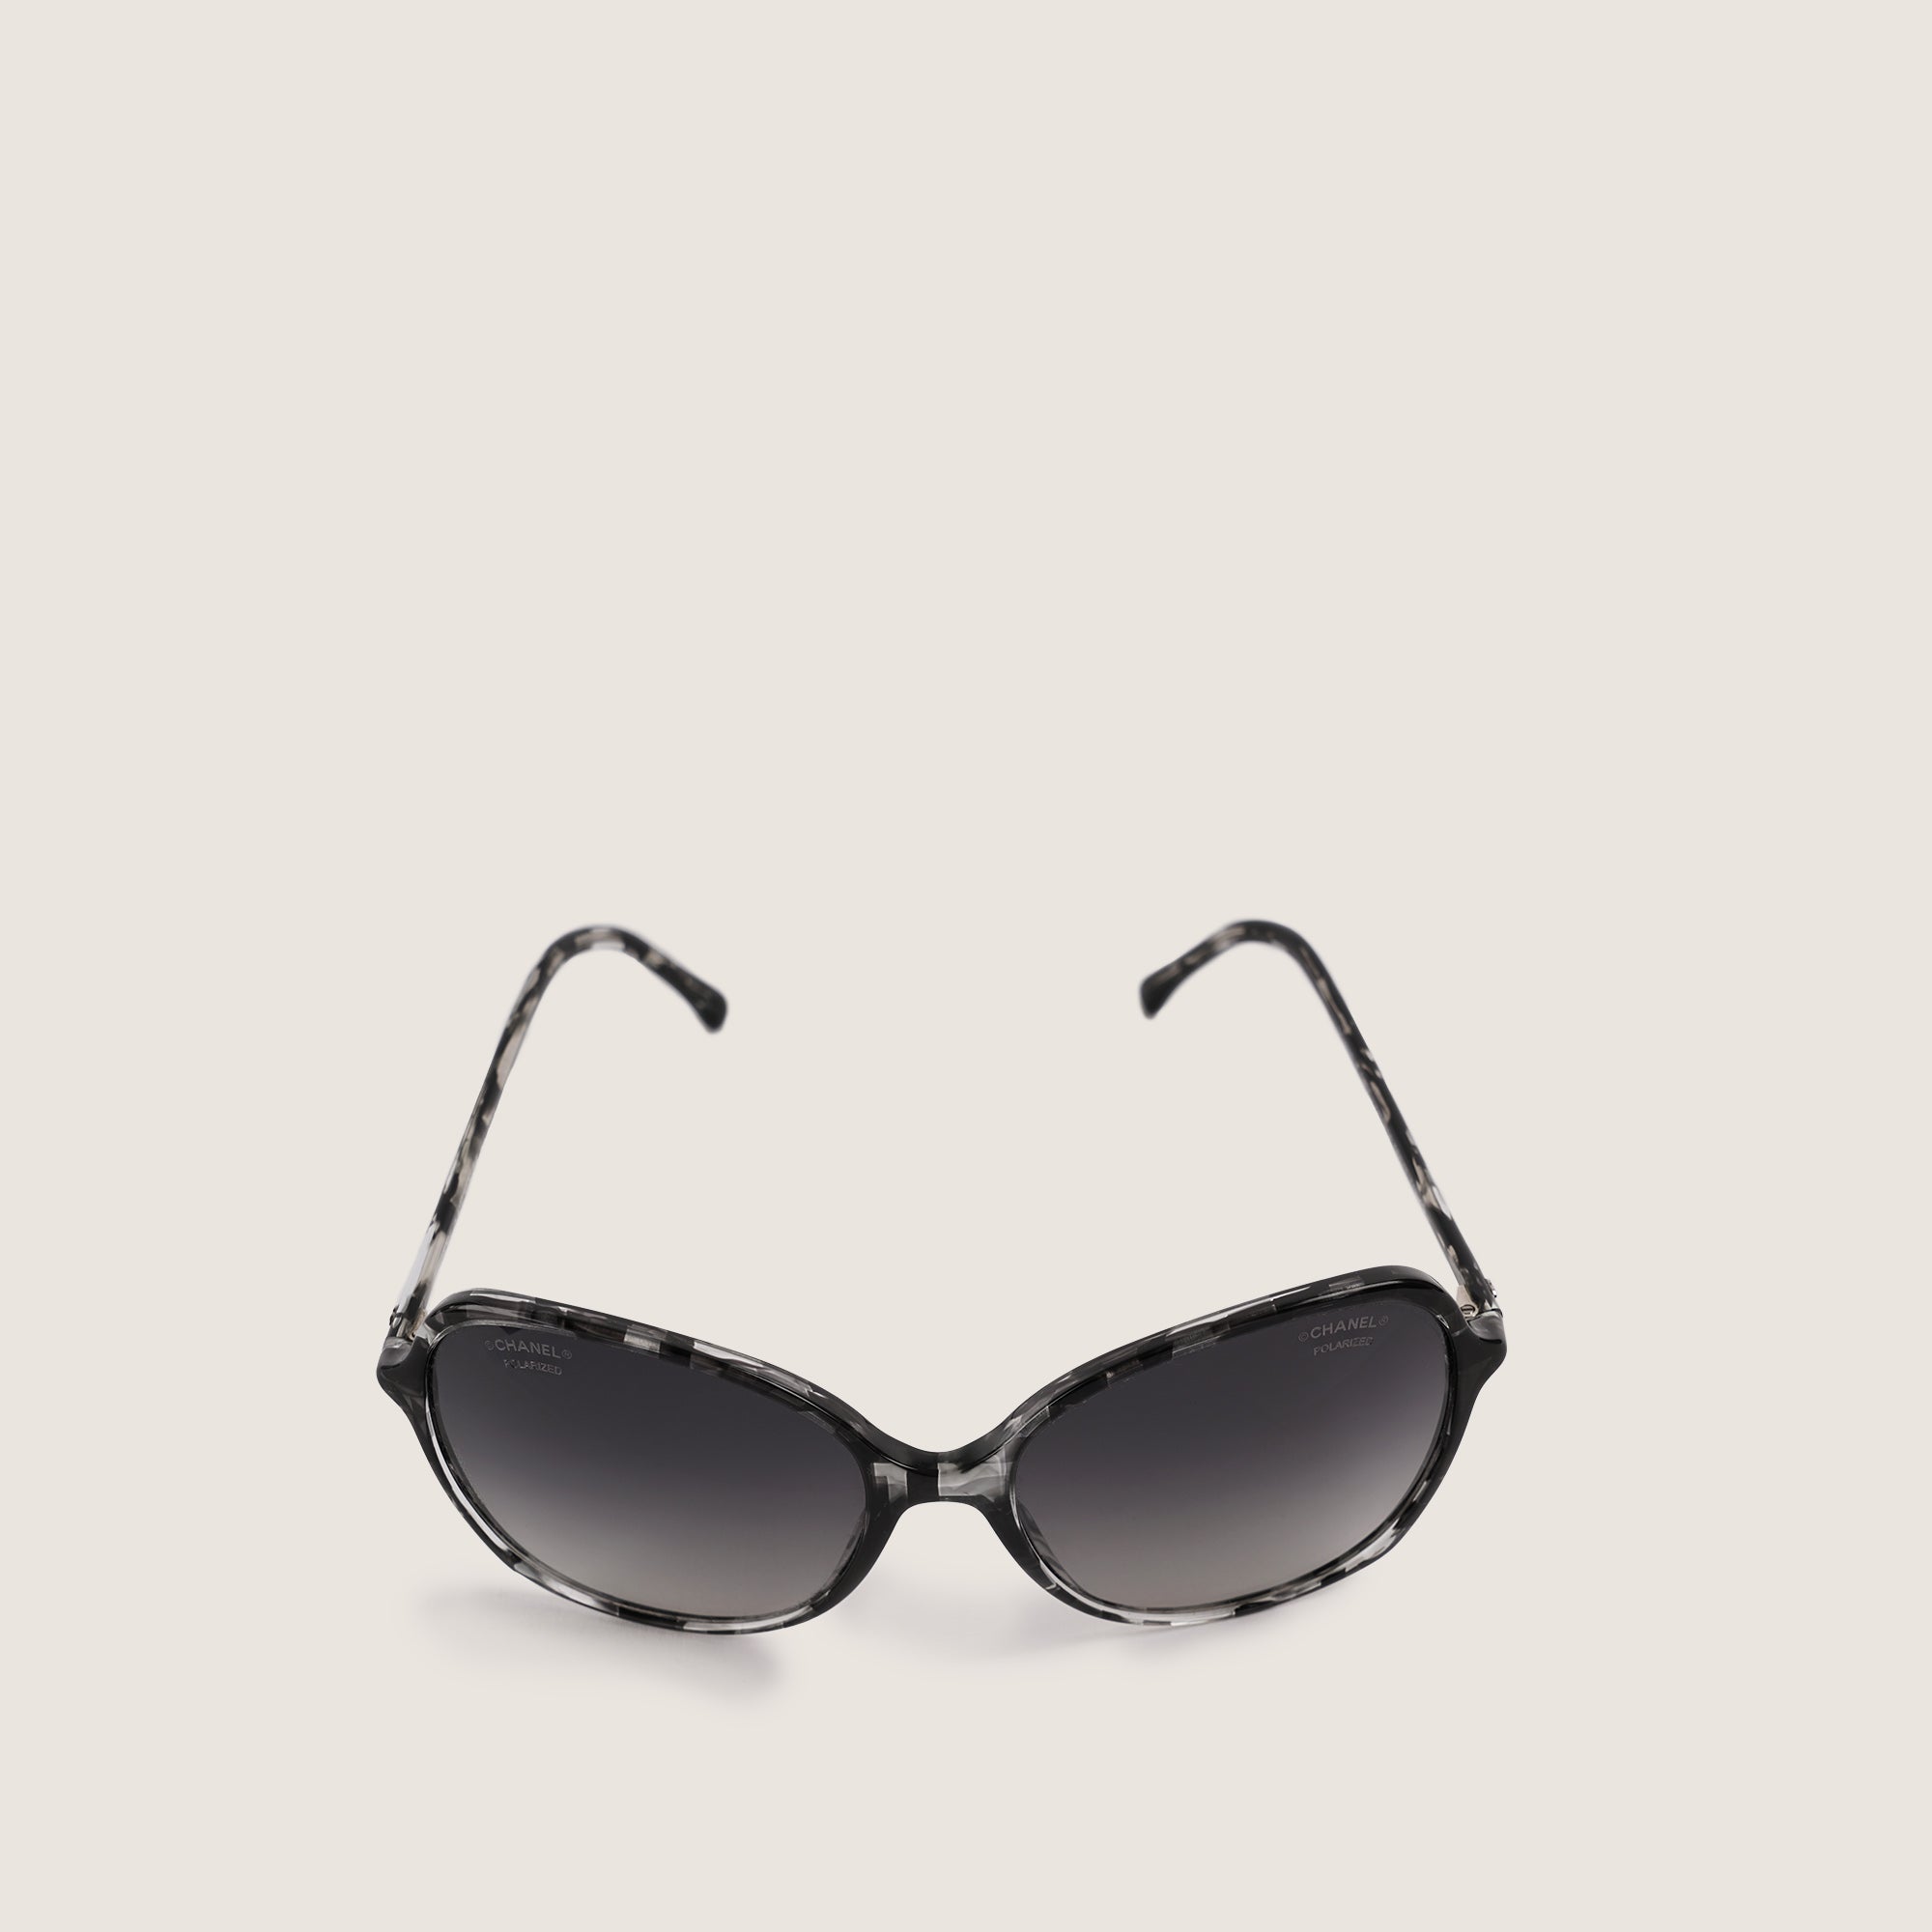 CC Tortoise Sunglasses - CHANEL - Affordable Luxury image